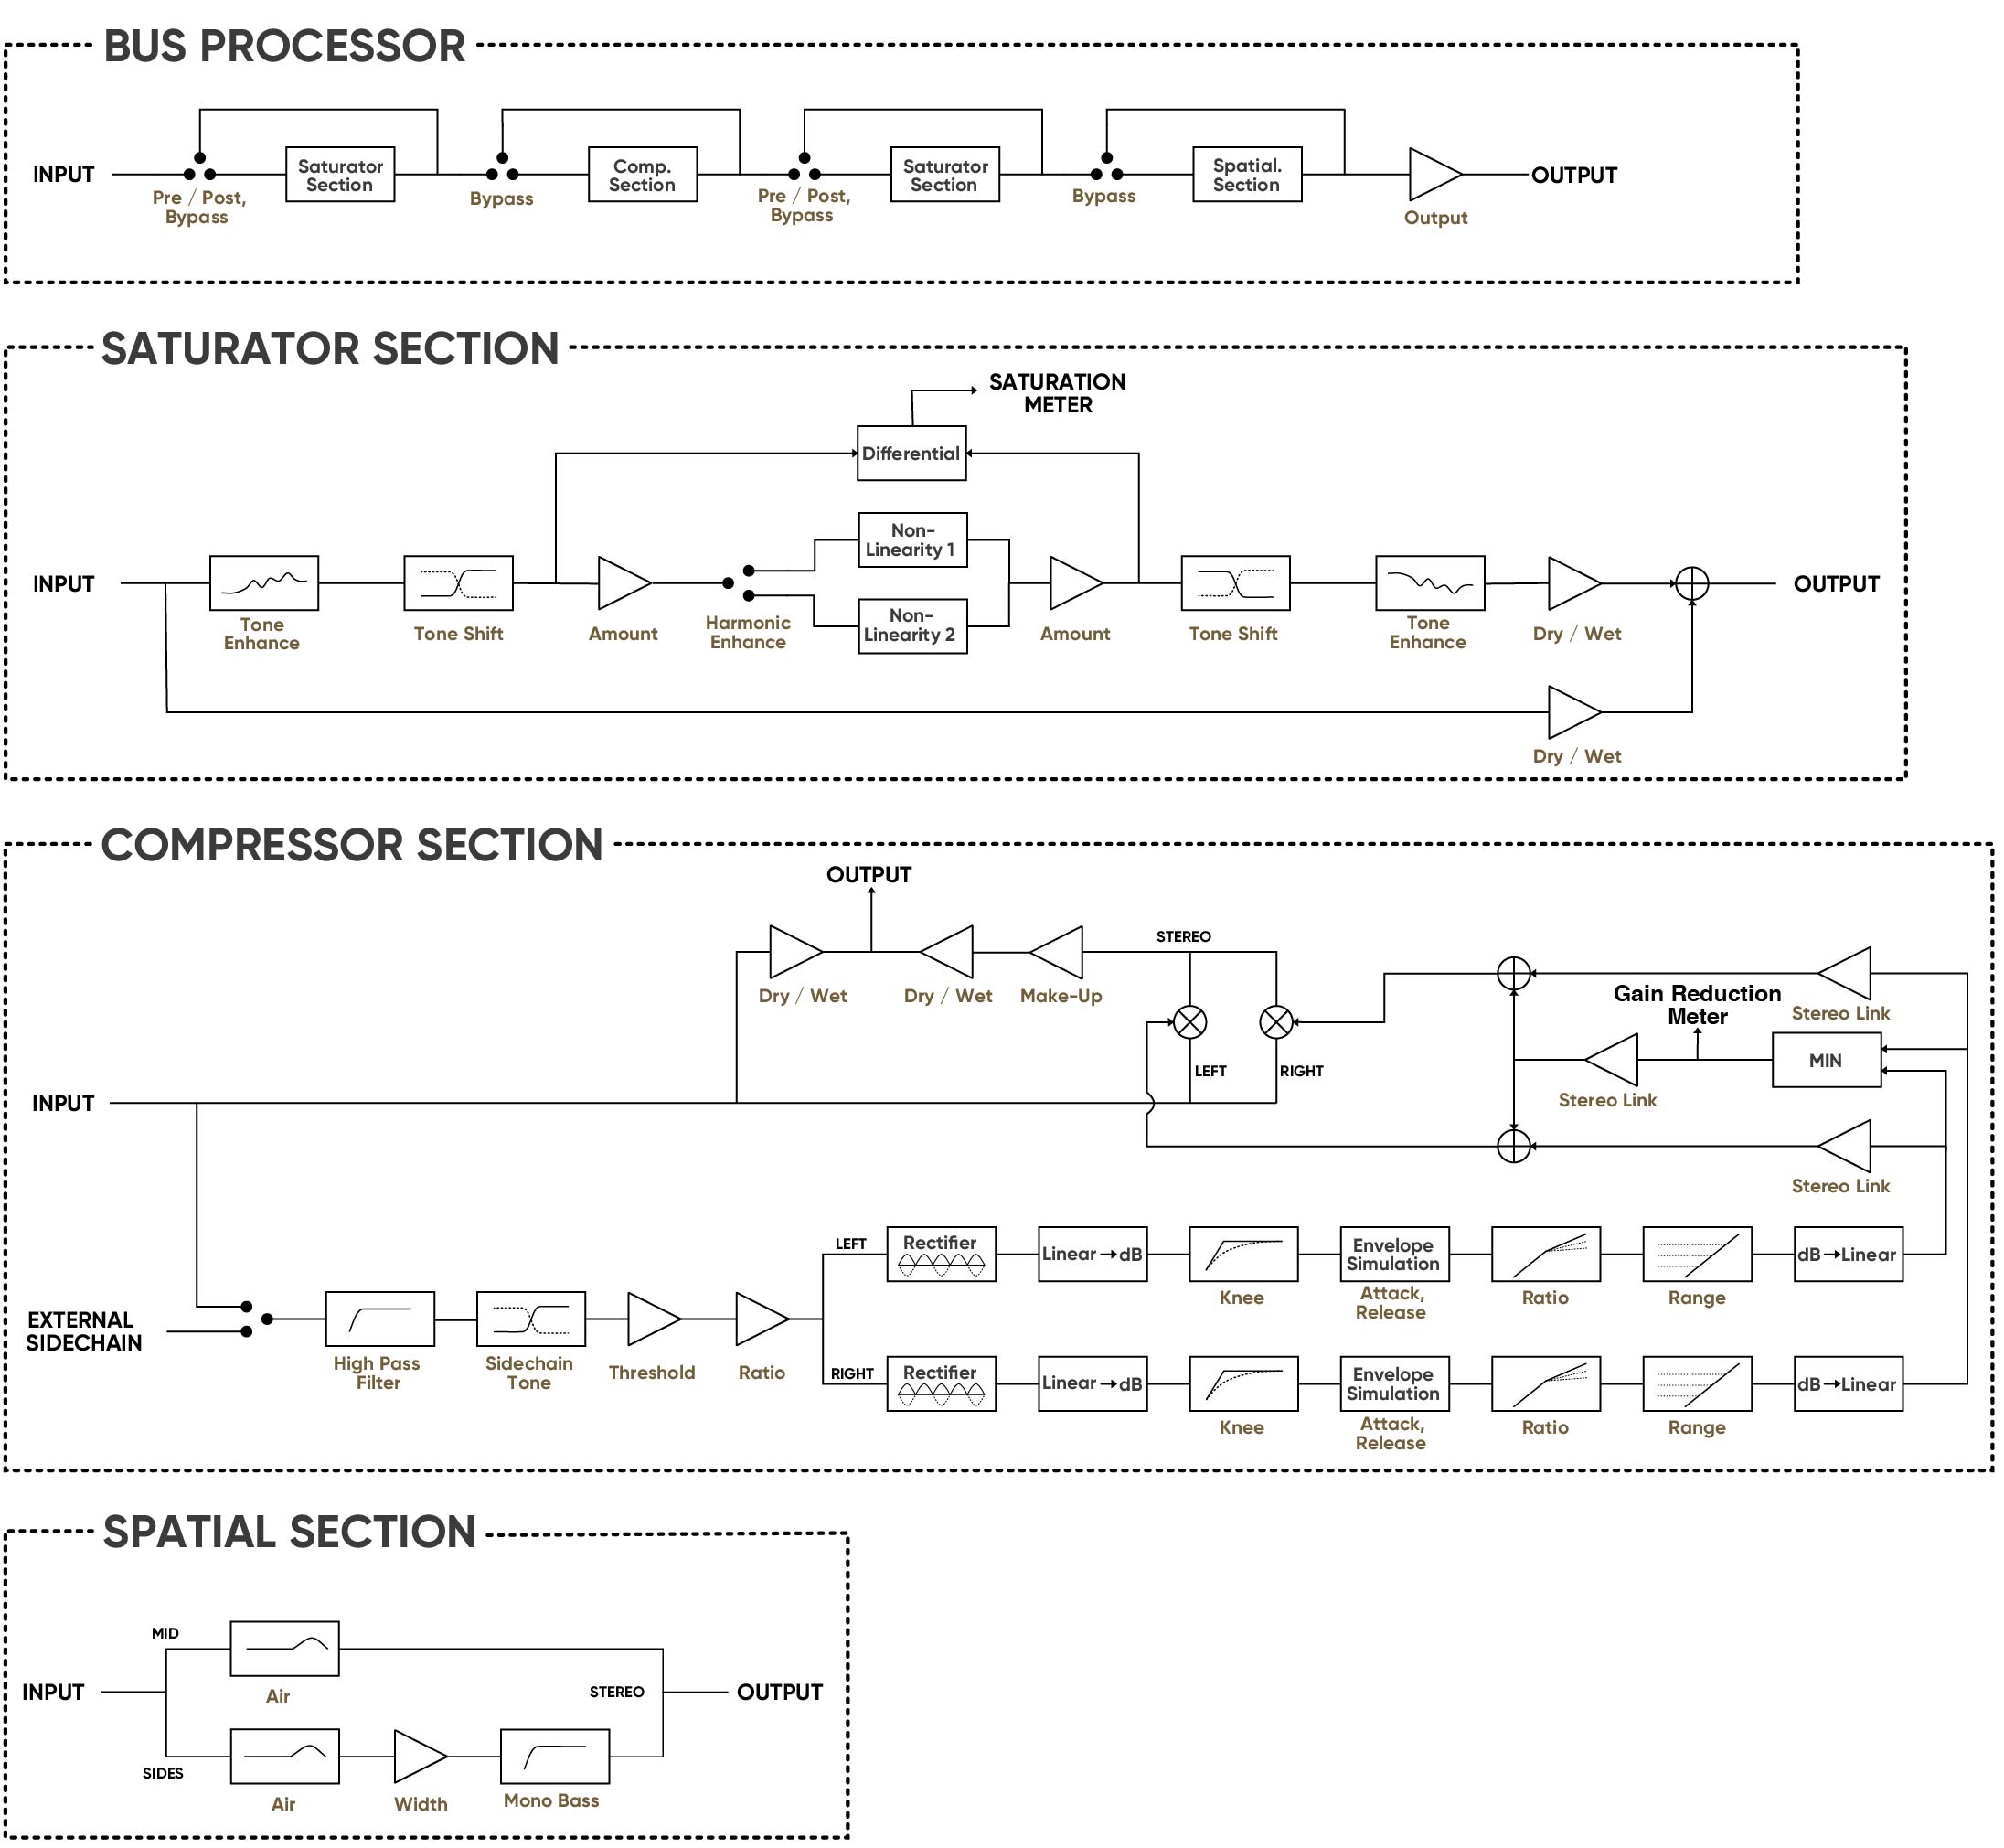 bus-processor-block-diagram.jpg